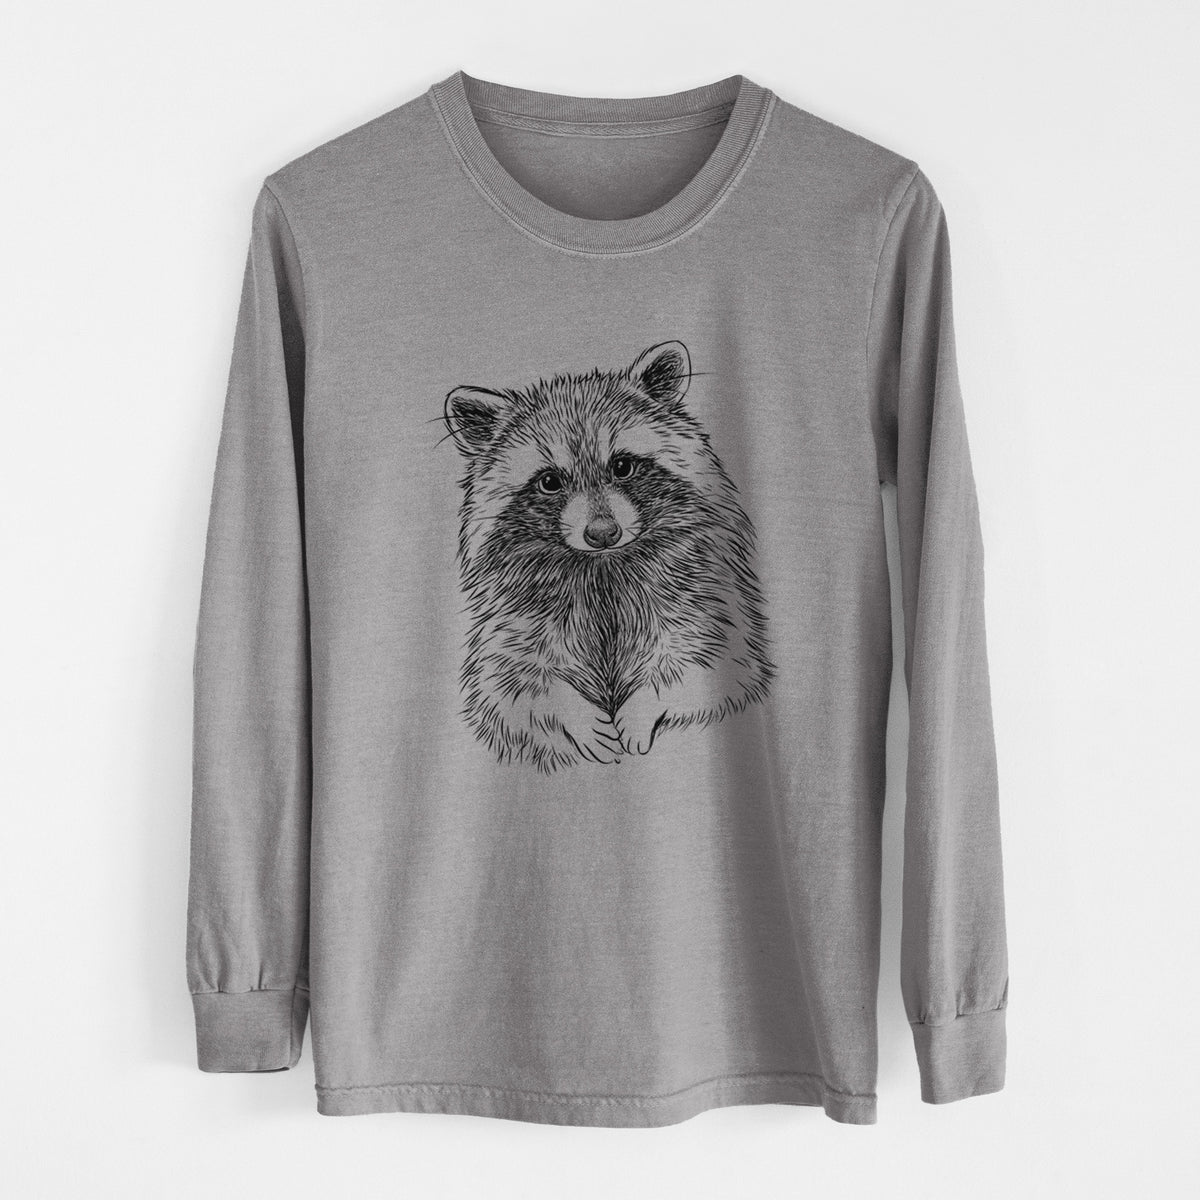 Raccoon - Procyon lotor - Heavyweight 100% Cotton Long Sleeve